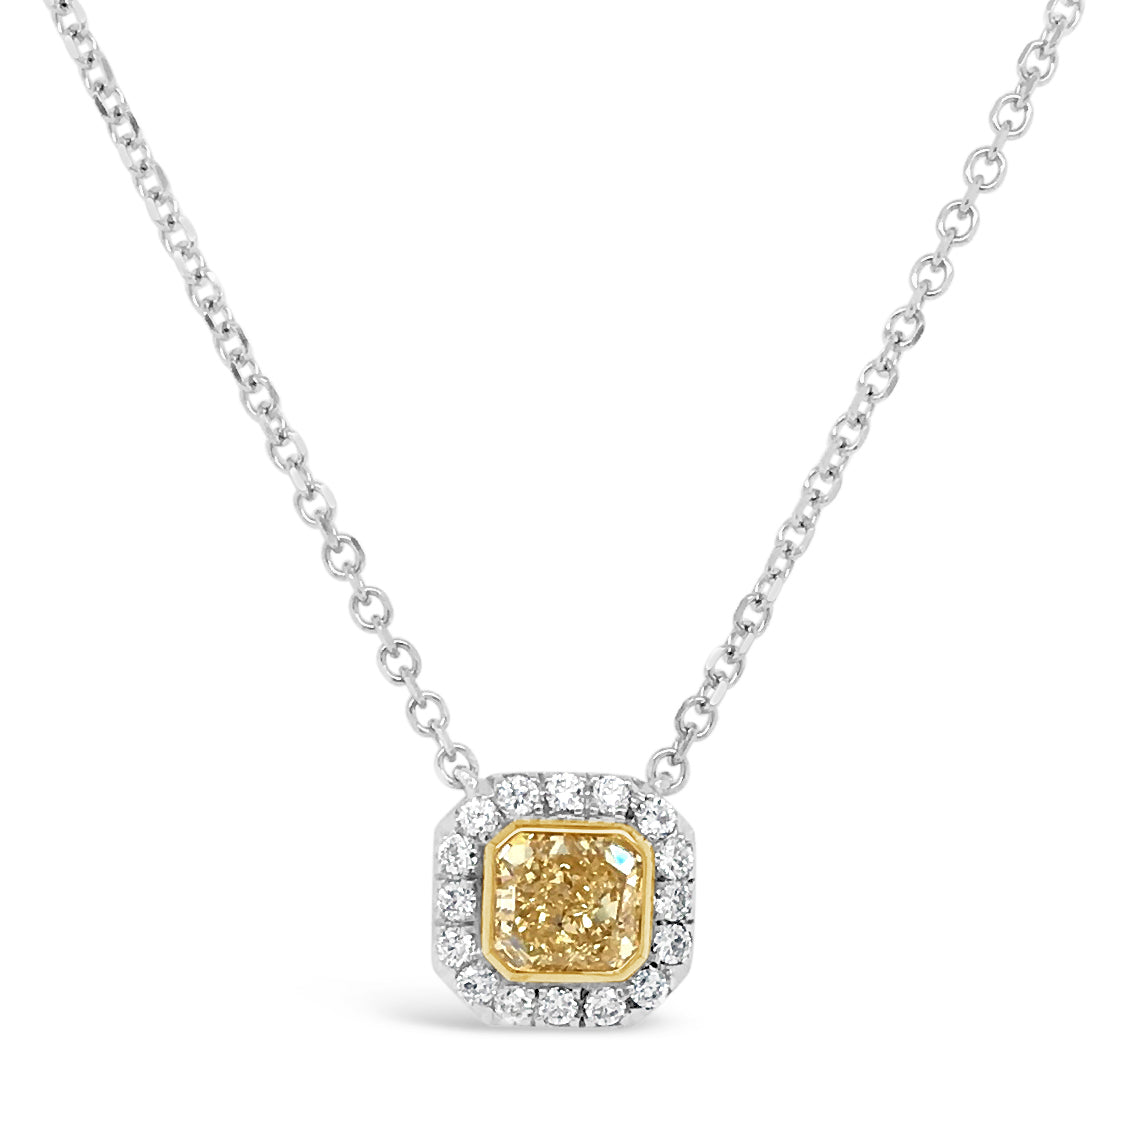 Yellow Diamond Pendant Necklace  -18K gold weighing 1.7 grams  -0.58 ct Fancy Yellow diamond; 14K gold setting weighing 1.9 grams  -16 round prong-set diamonds totaling 0.15 carats